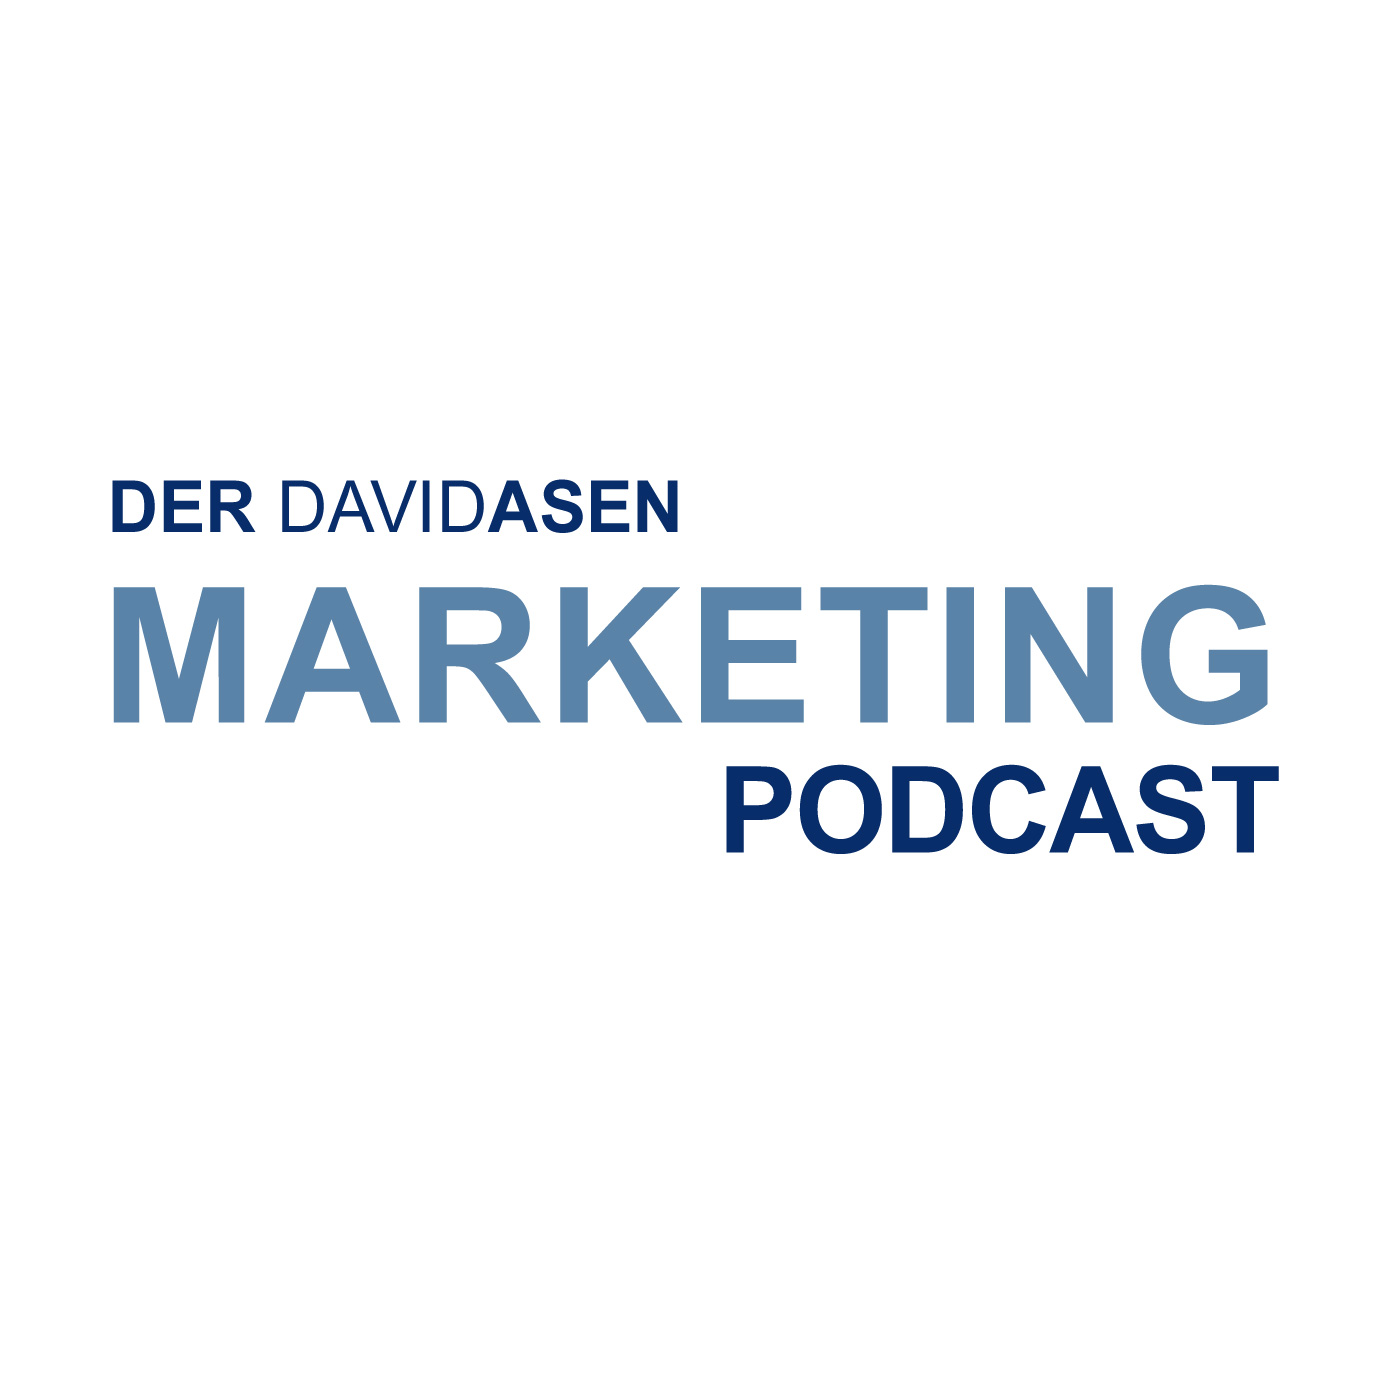 Top in iTunes: Der David Asen Marketing Podcast belegt Platz 3